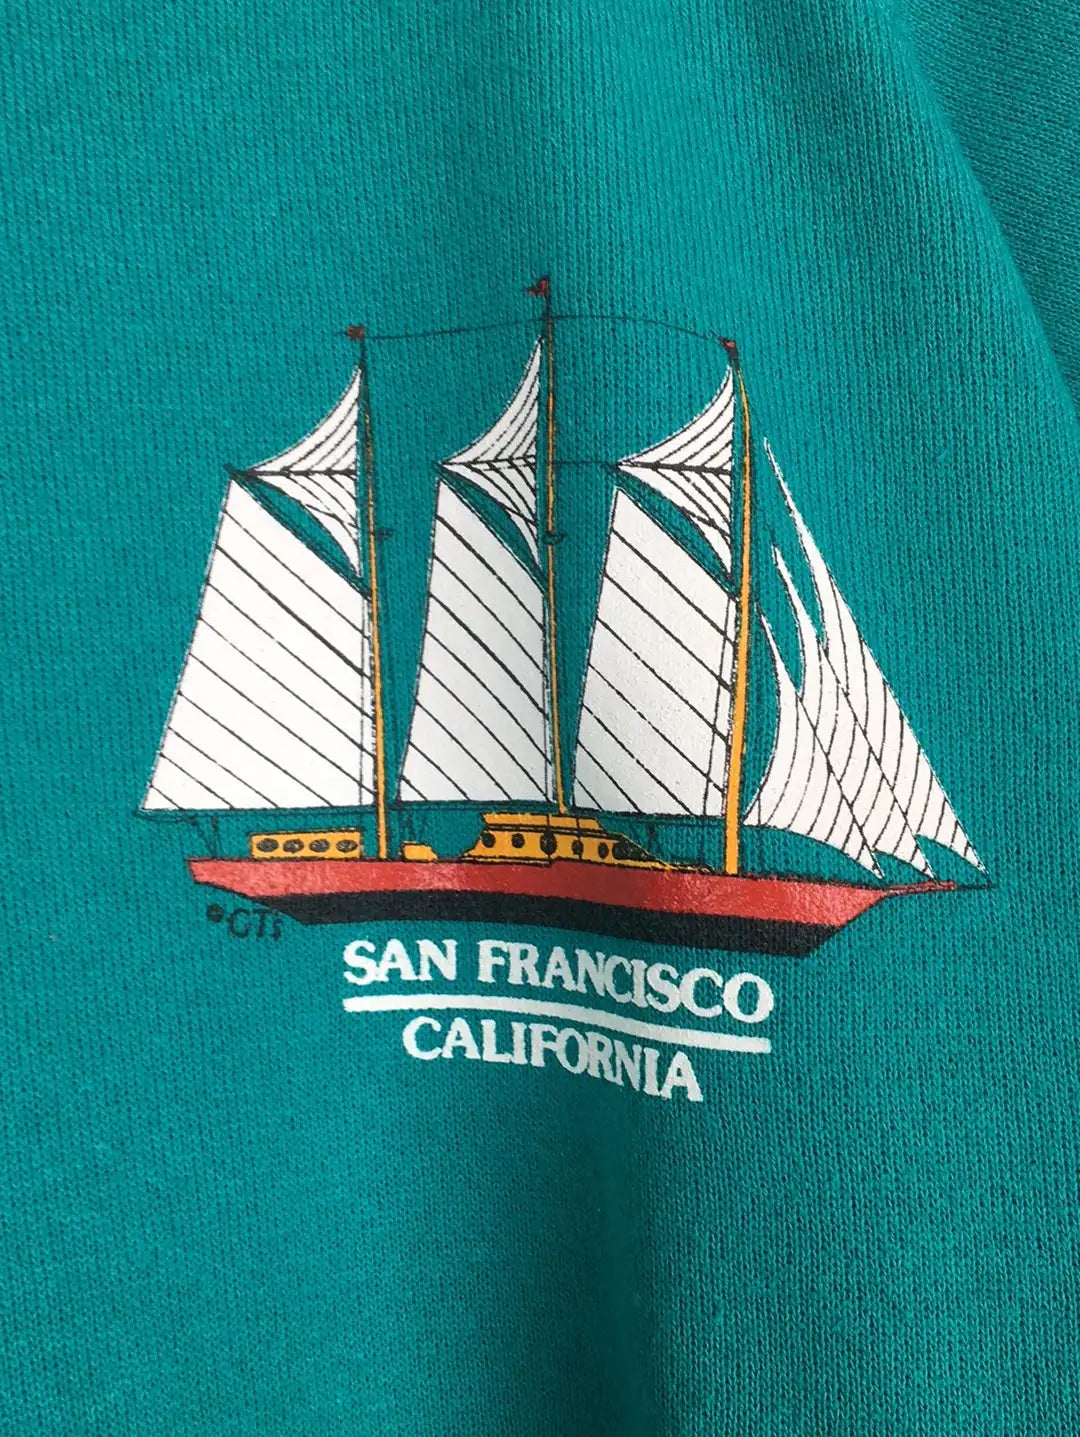 Hanes “San Francisco” Sweater (L)